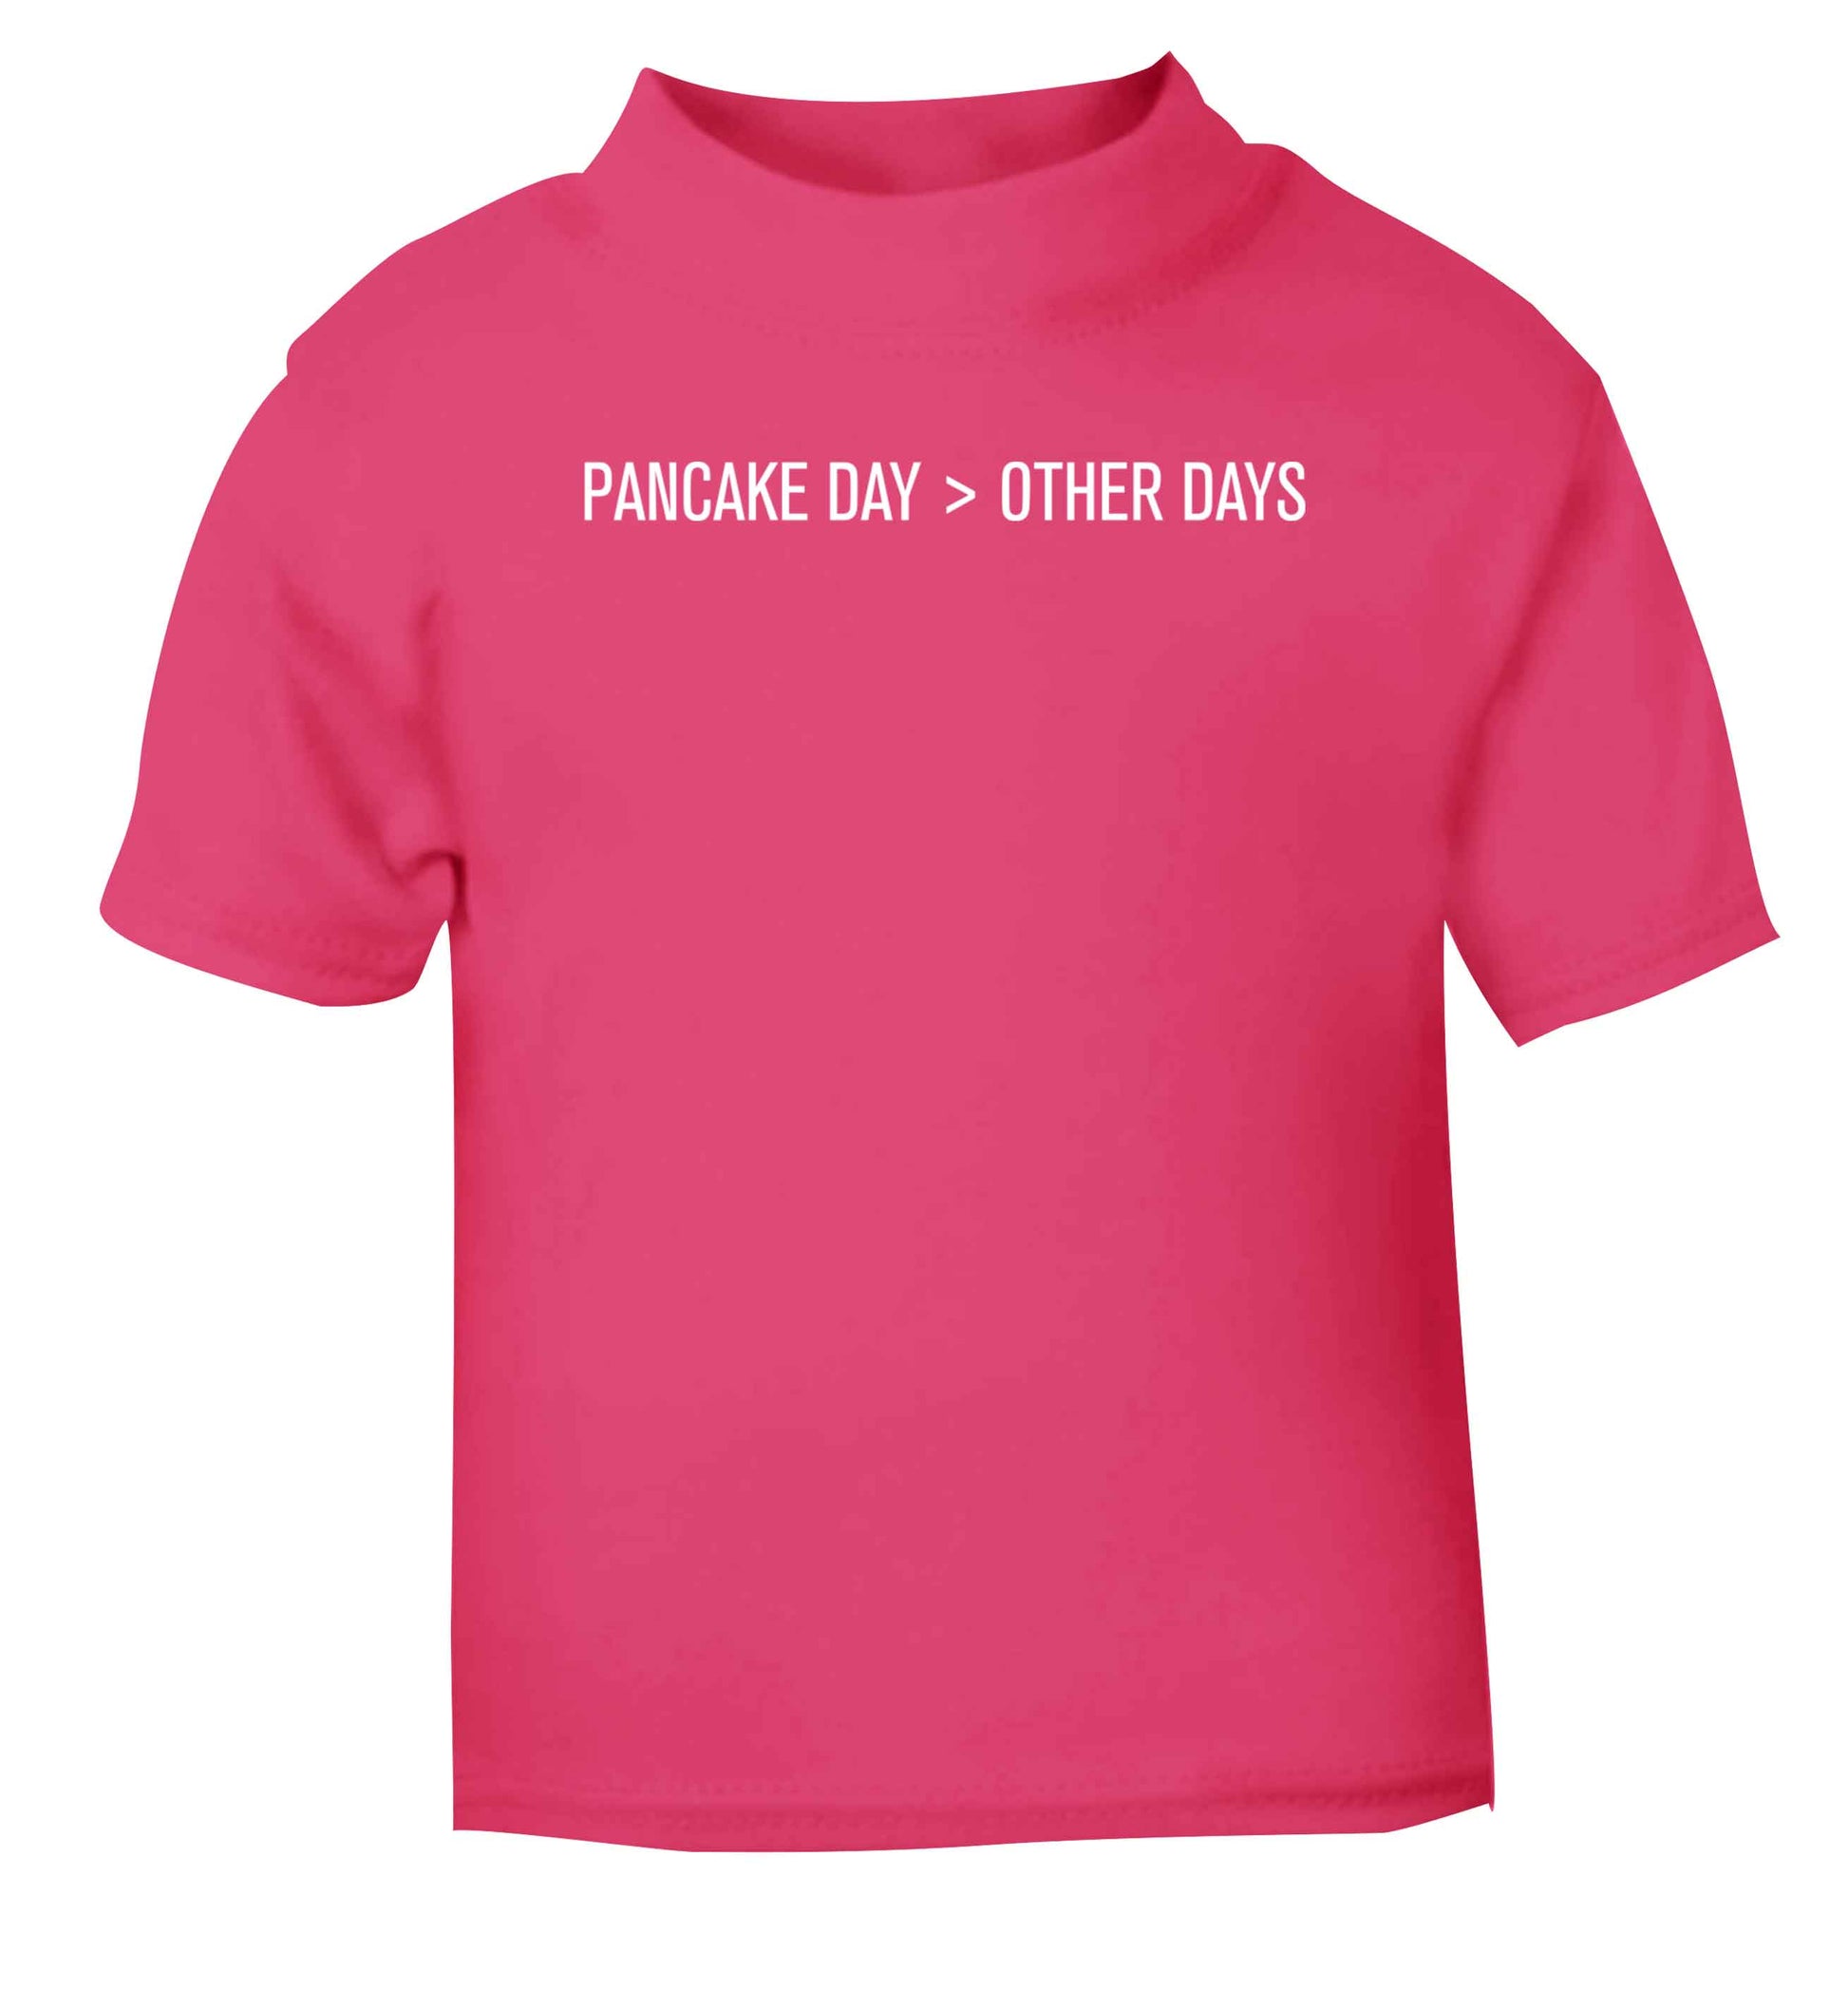 Pancake day > other days pink baby toddler Tshirt 2 Years